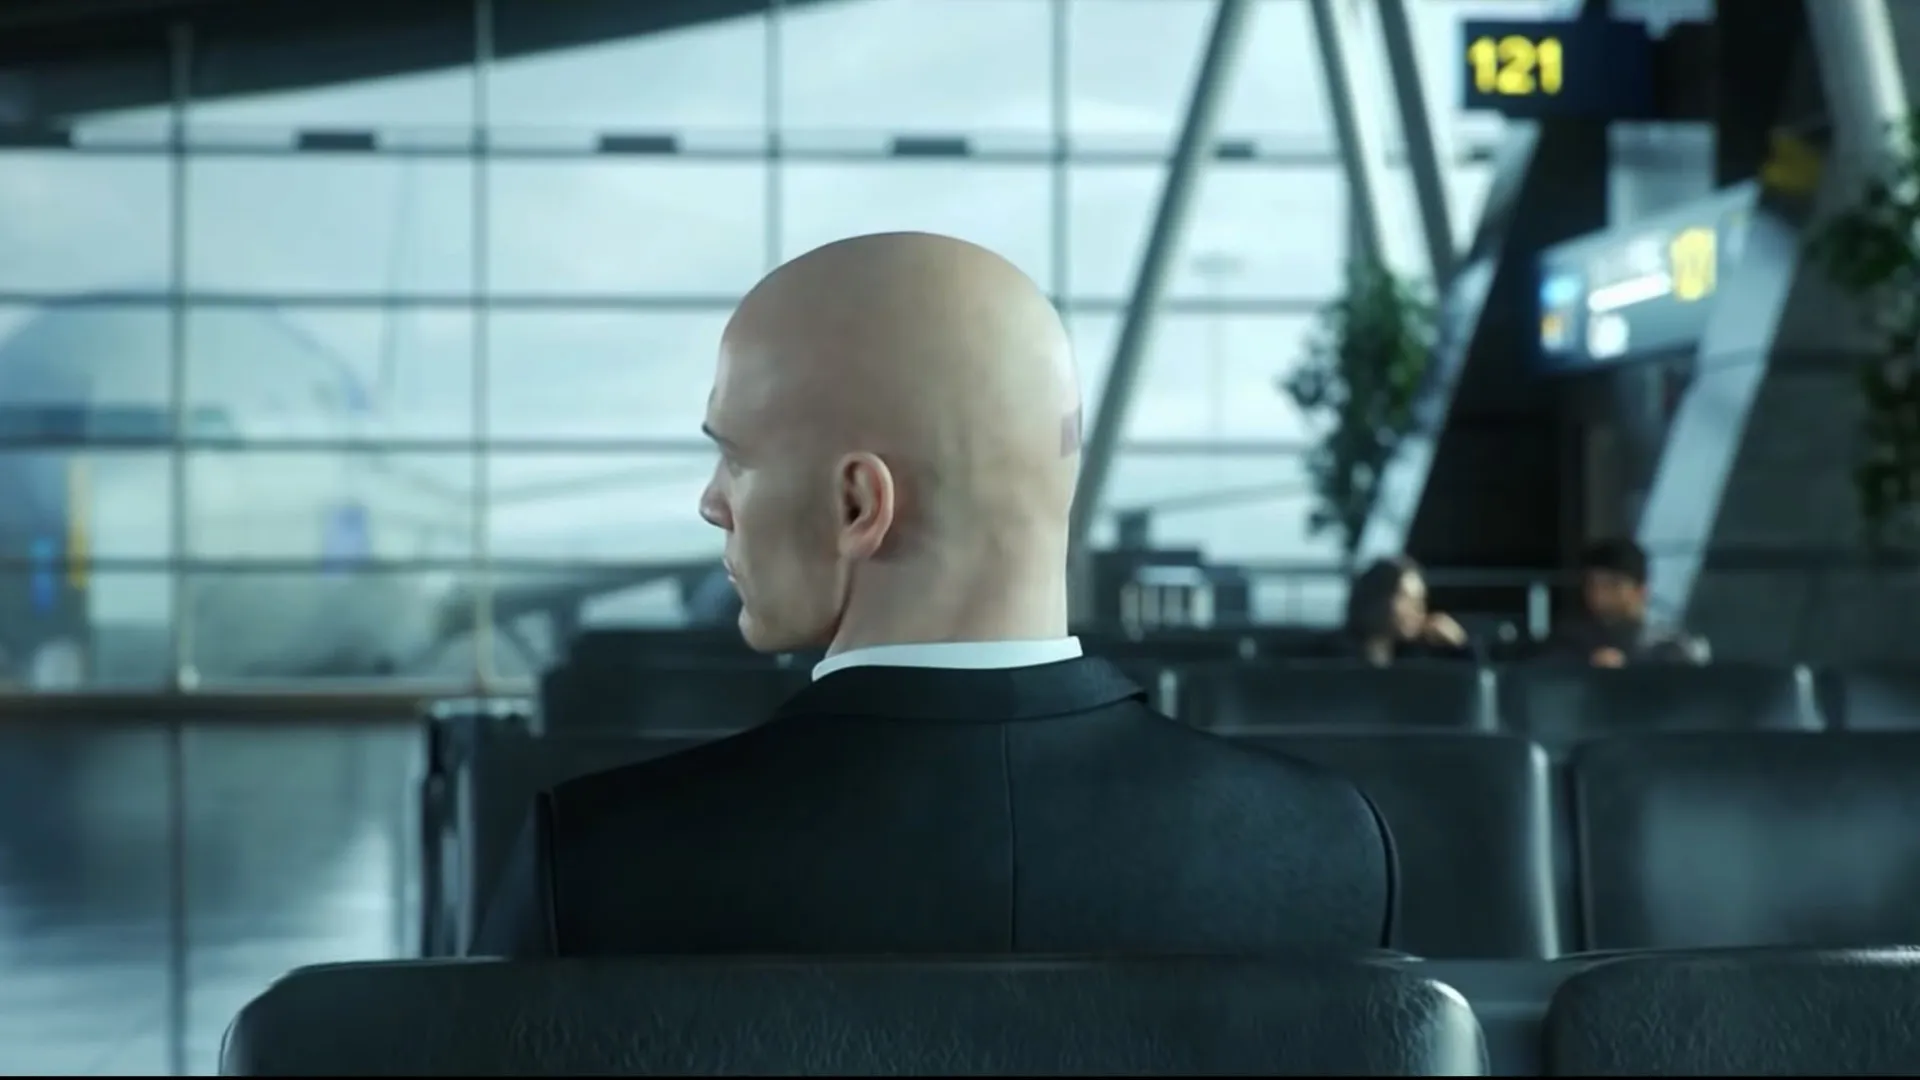 hitman cutscene screenshot airportf1587154941